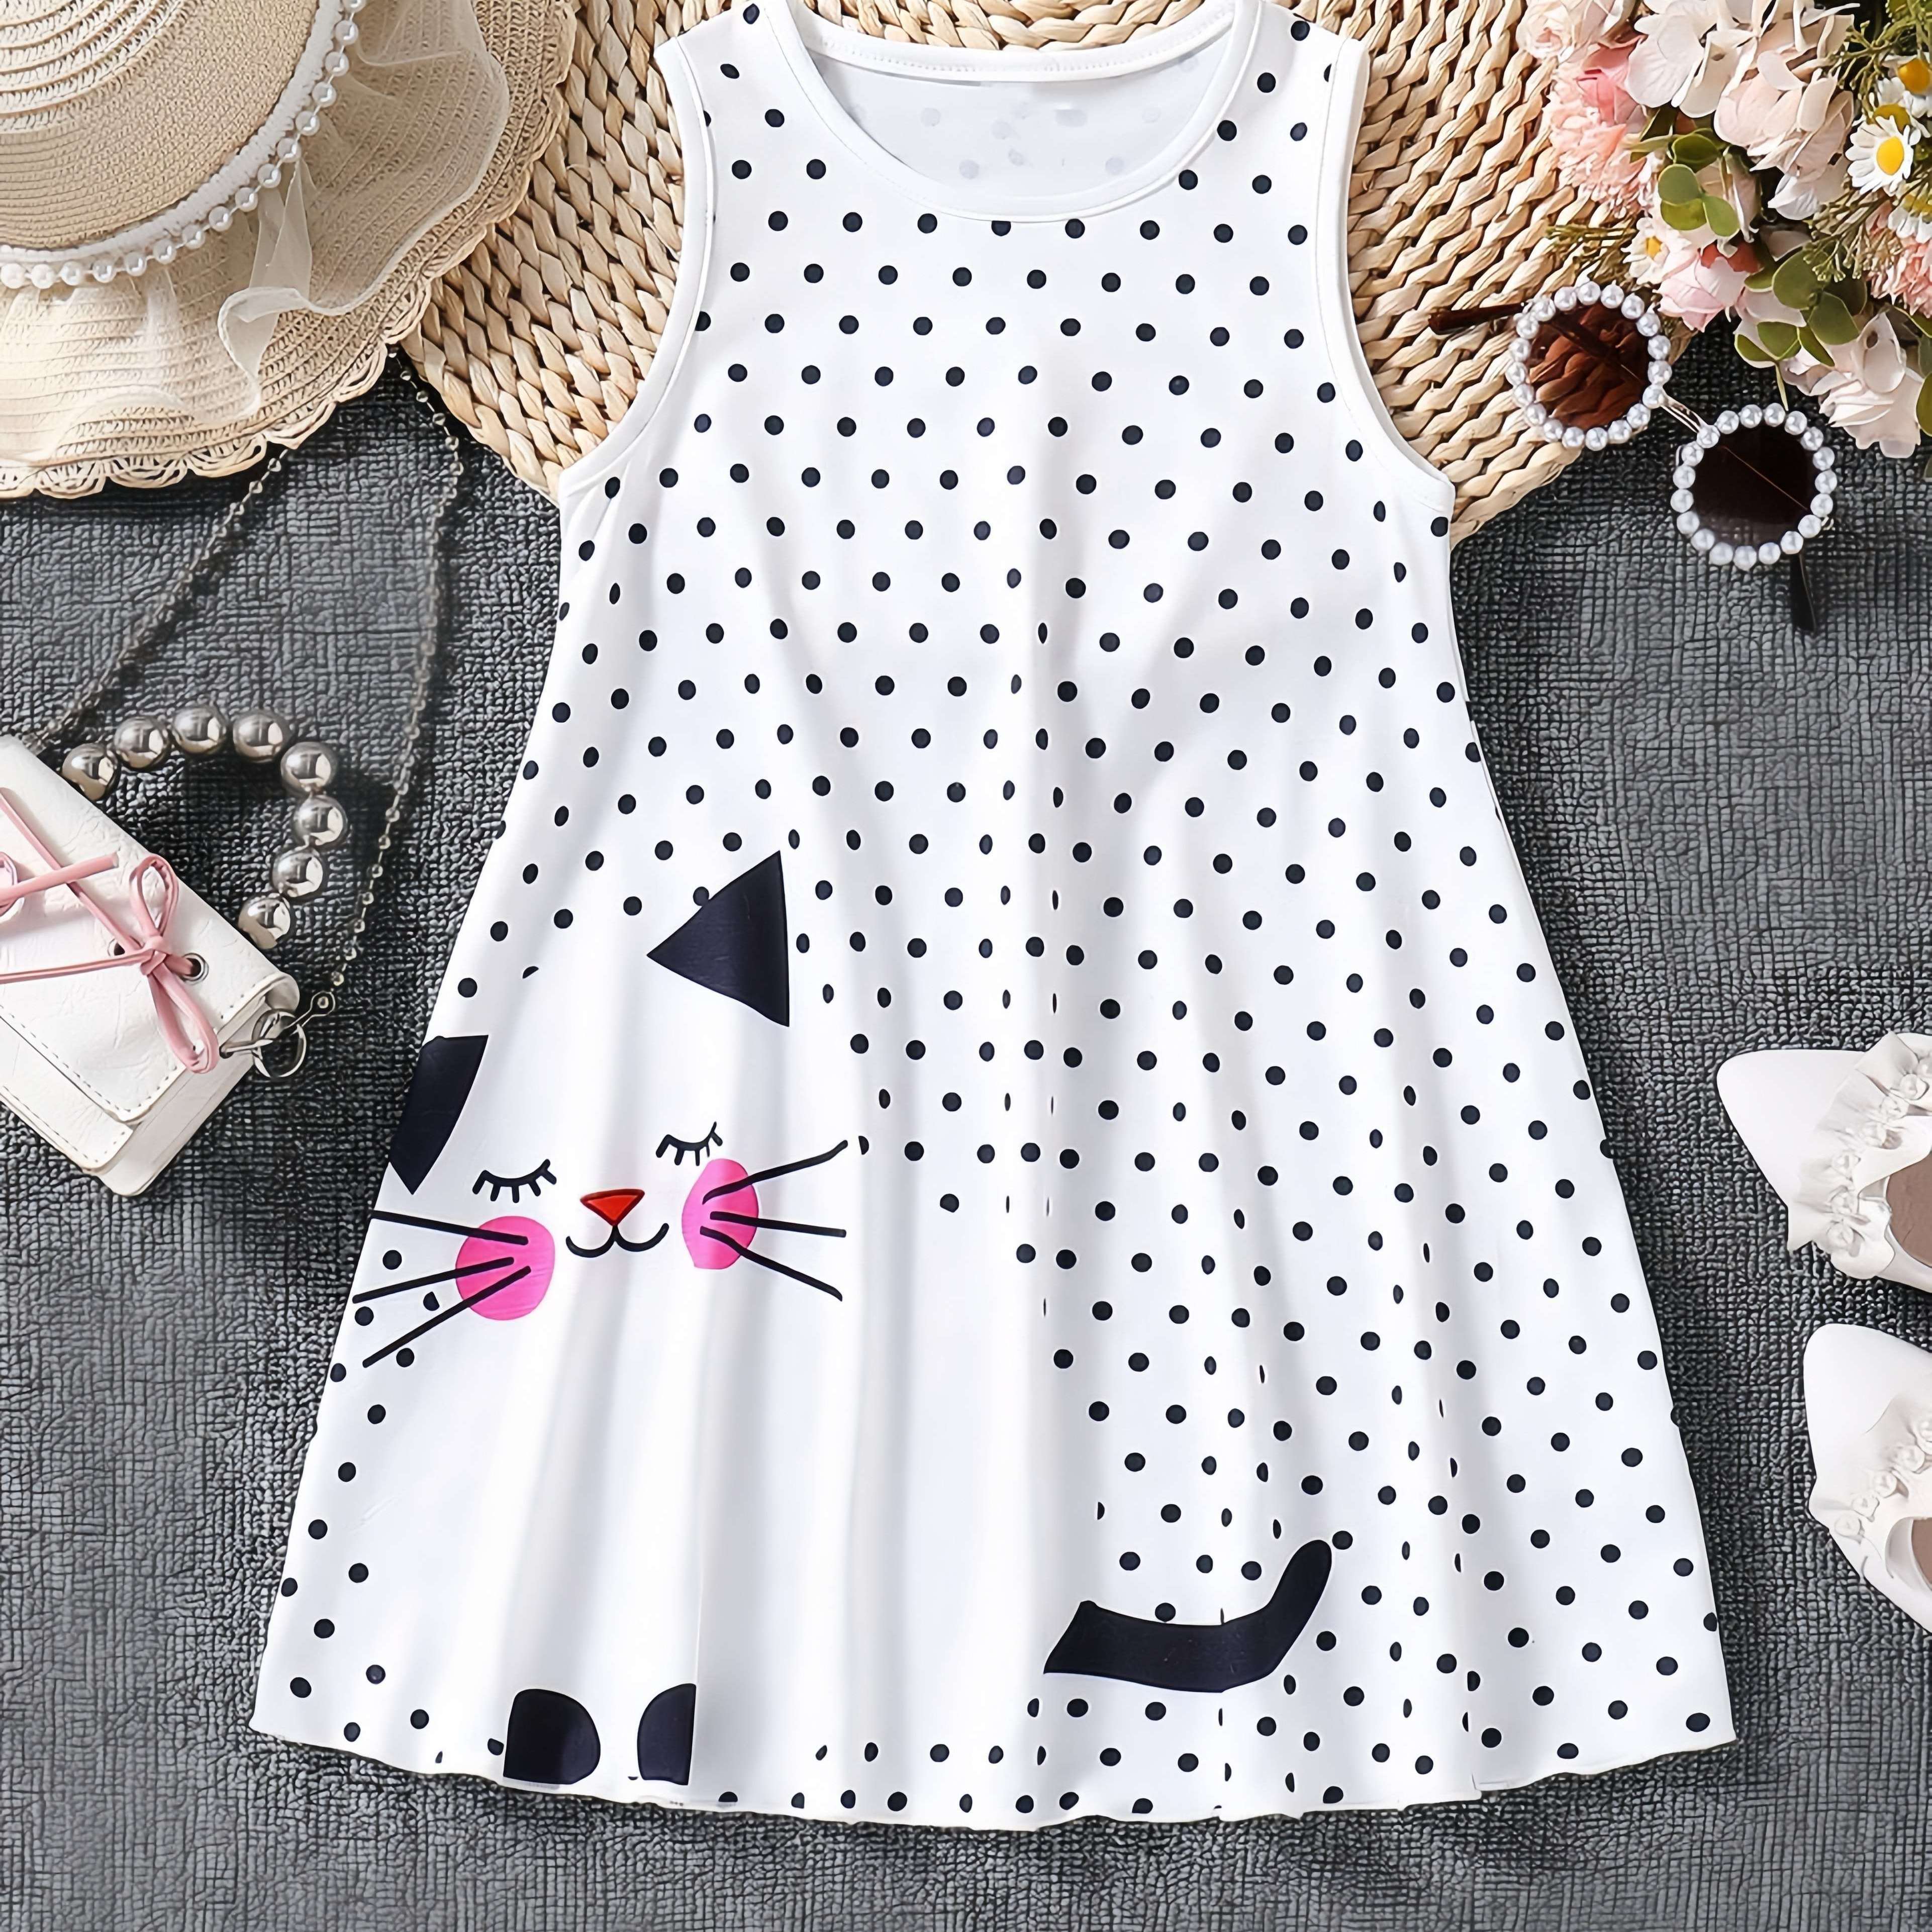 

Kitty Pattern Polka Dot Dress For Girls Comfy Sleeveless Casual Dresses, Summer Clothing Gift